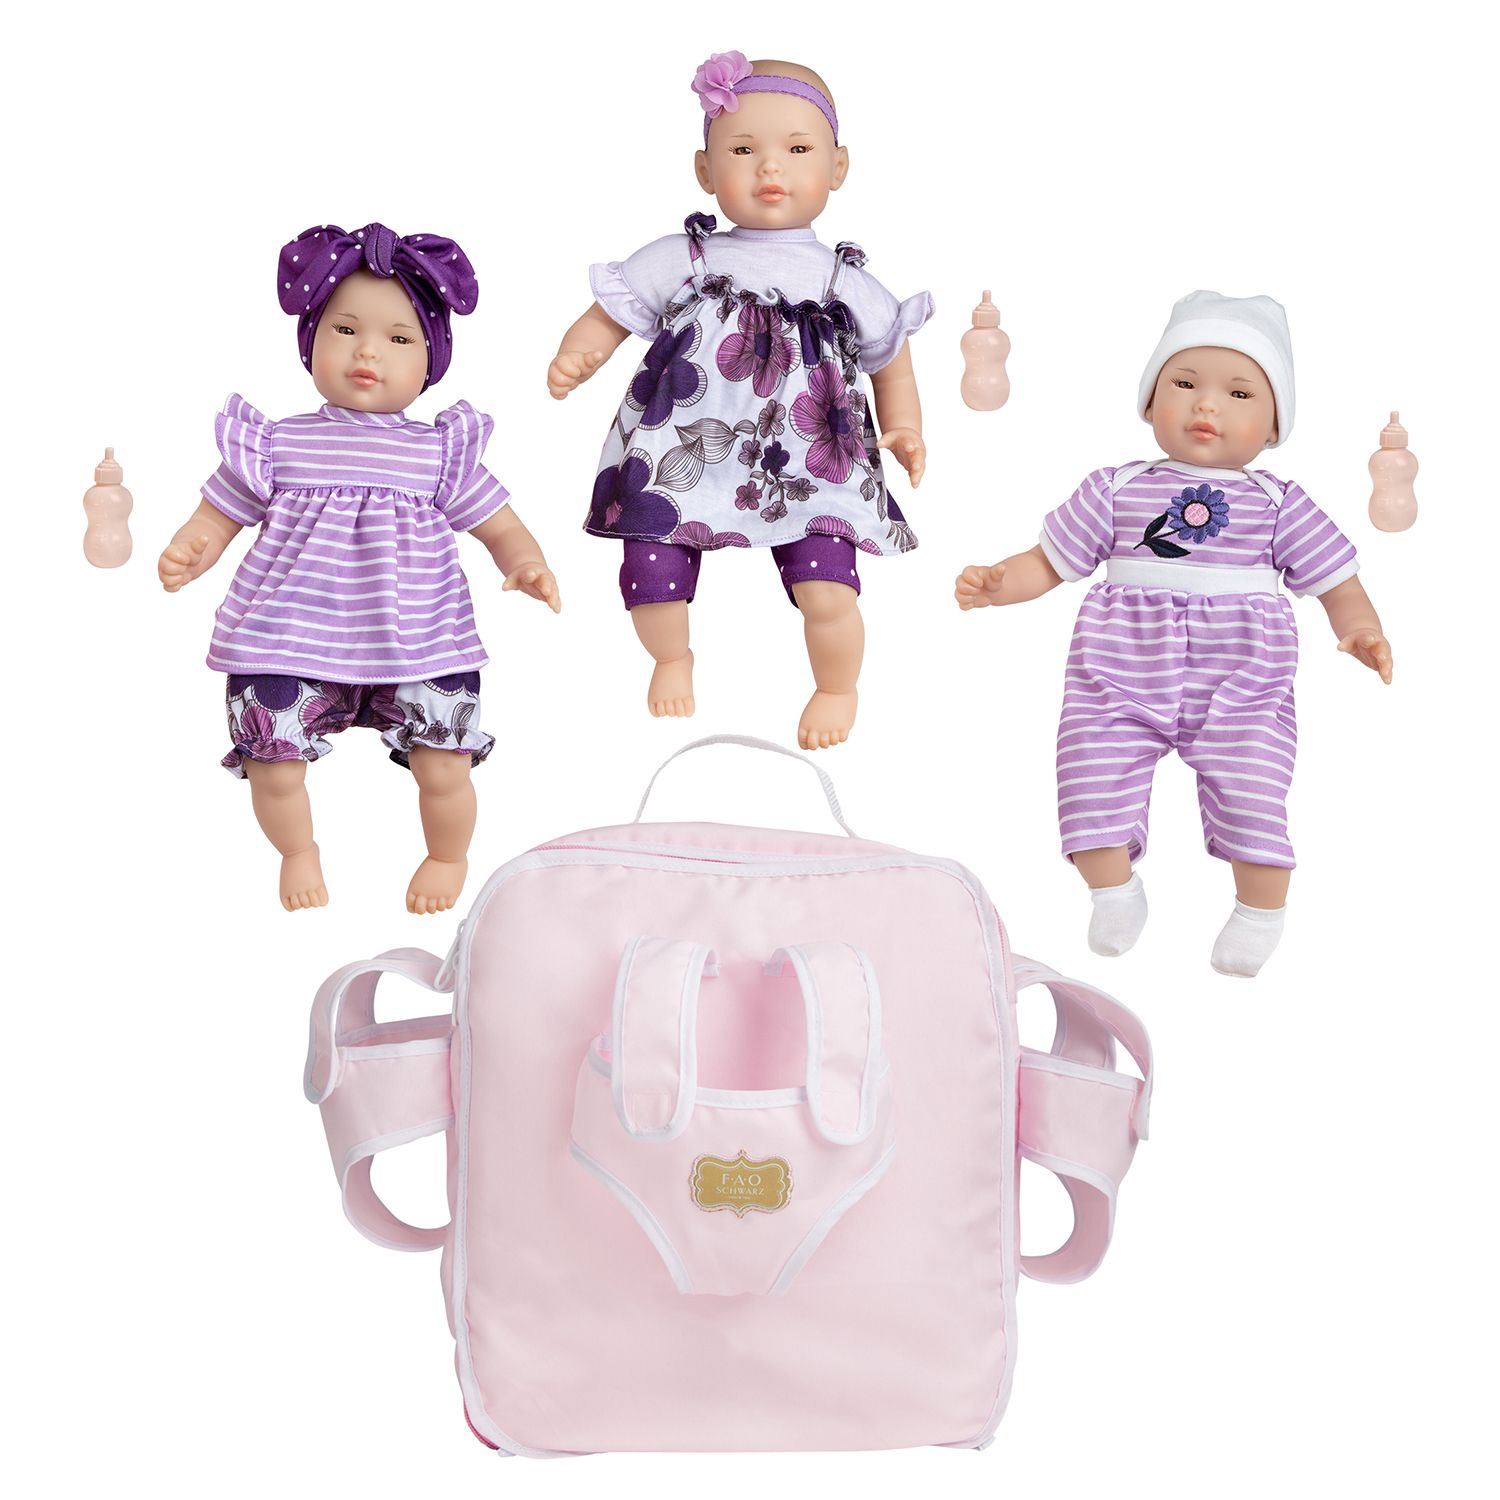 FAO Schwarz Baby Doll Triplets with 